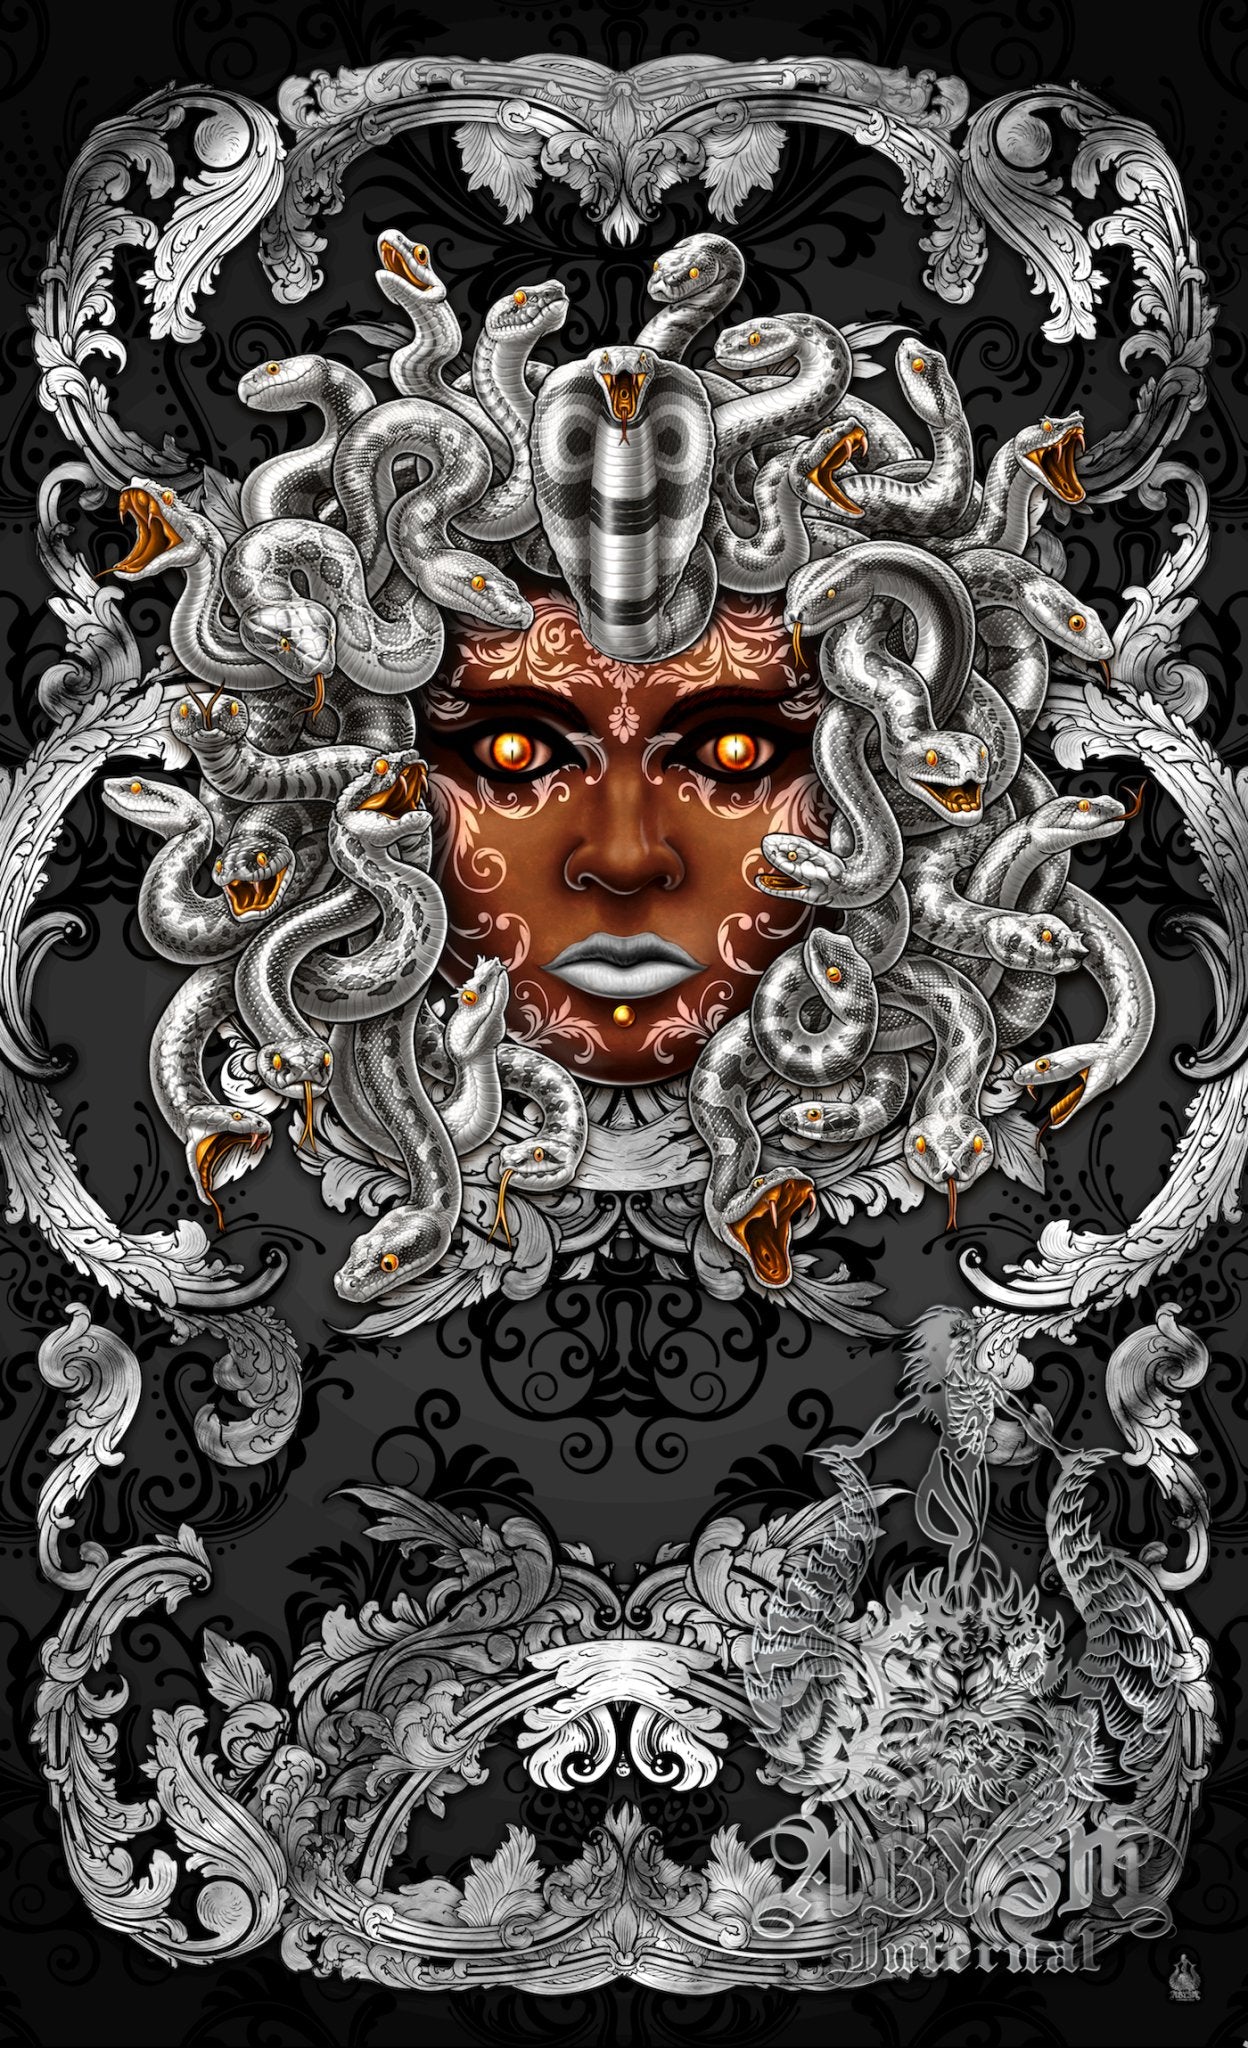 Medusa Curtains, 50x84' Printed Window Panels, Skull Art Print, Macabre Decor - Silver Snakes, 2 Faces - Abysm Internal